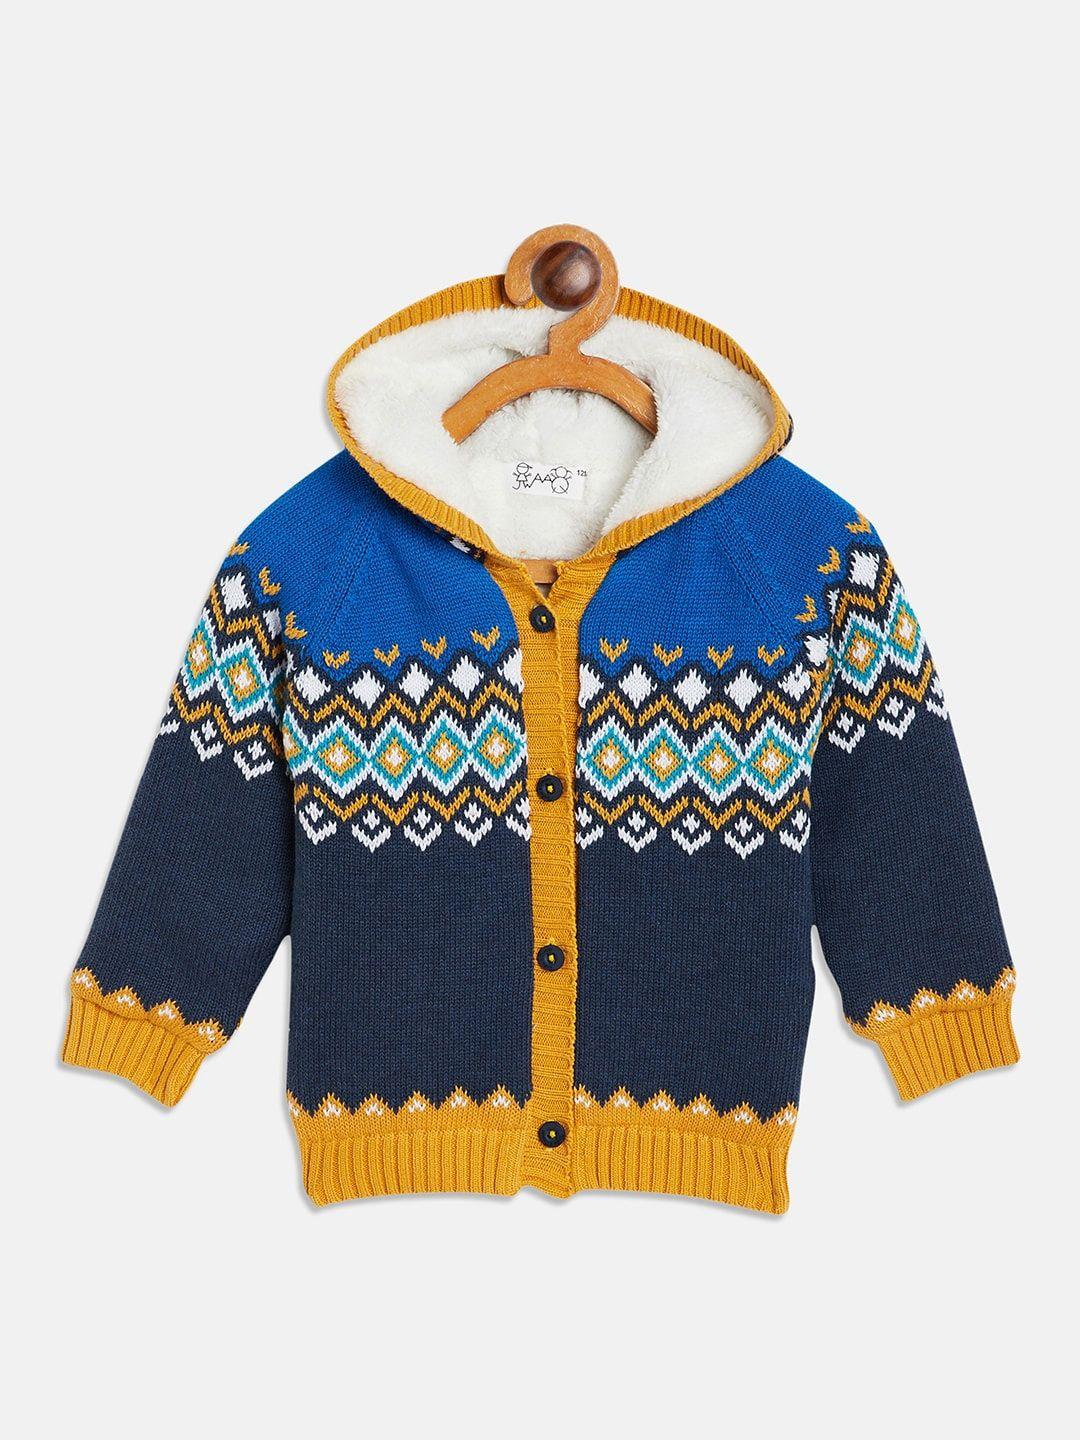 jwaaq kids blue & yellow printed pullover